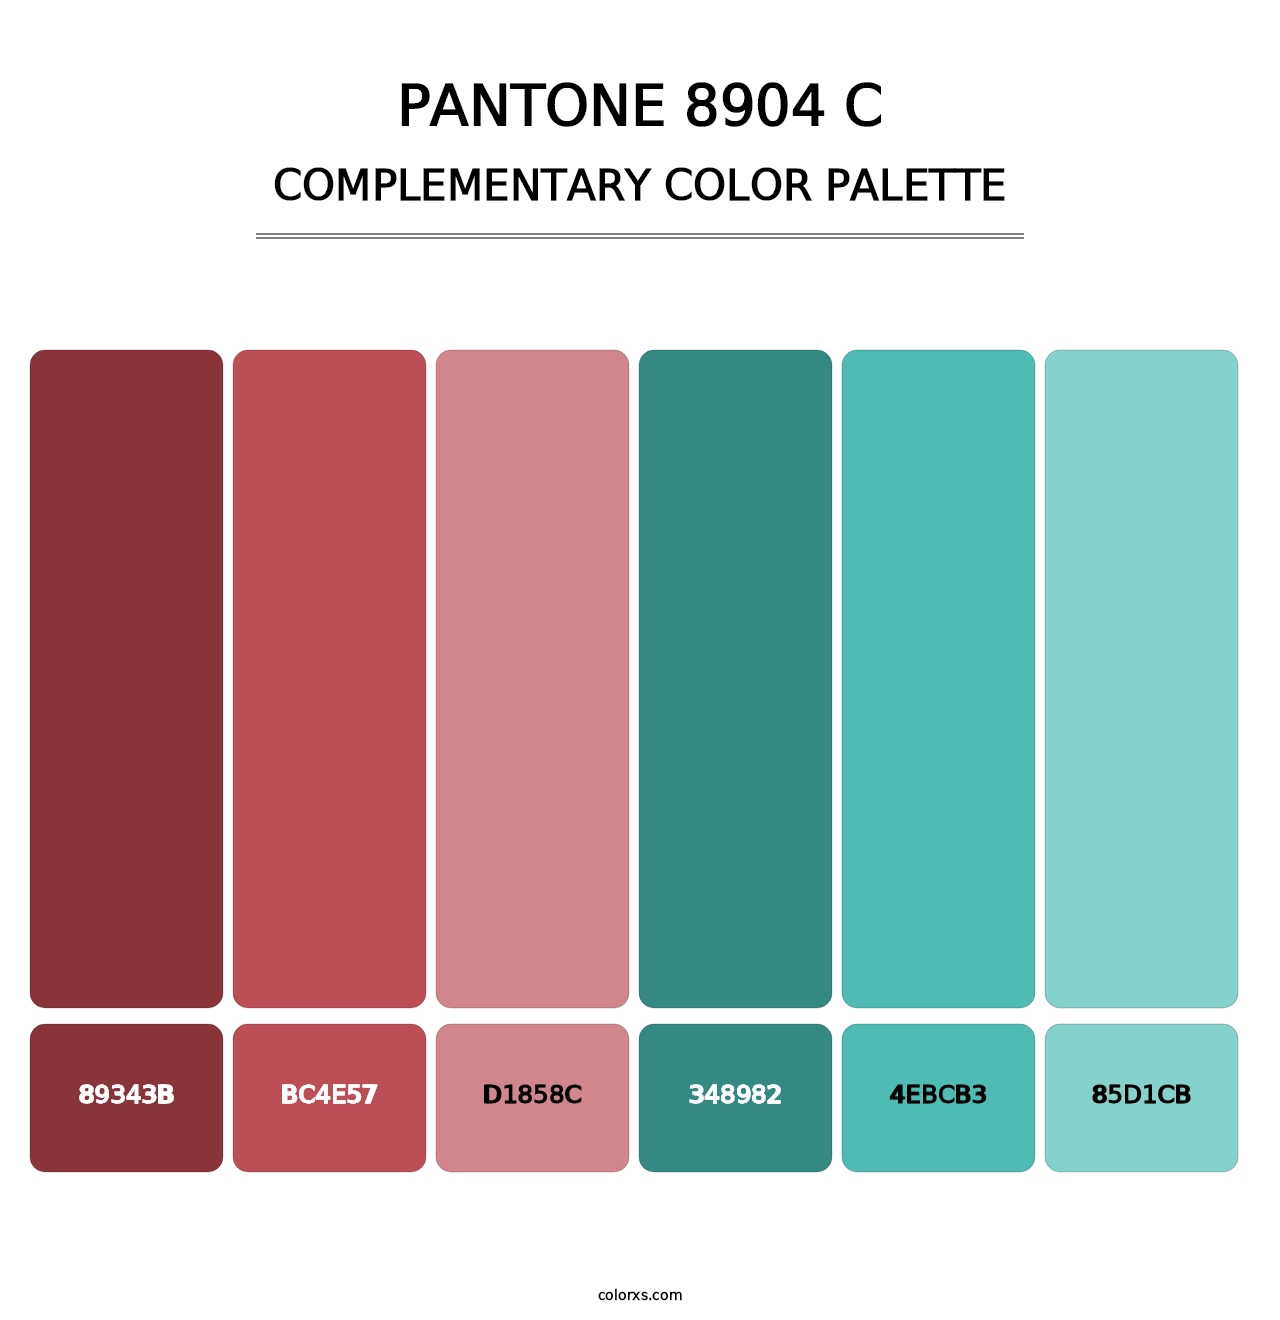 PANTONE 8904 C - Complementary Color Palette